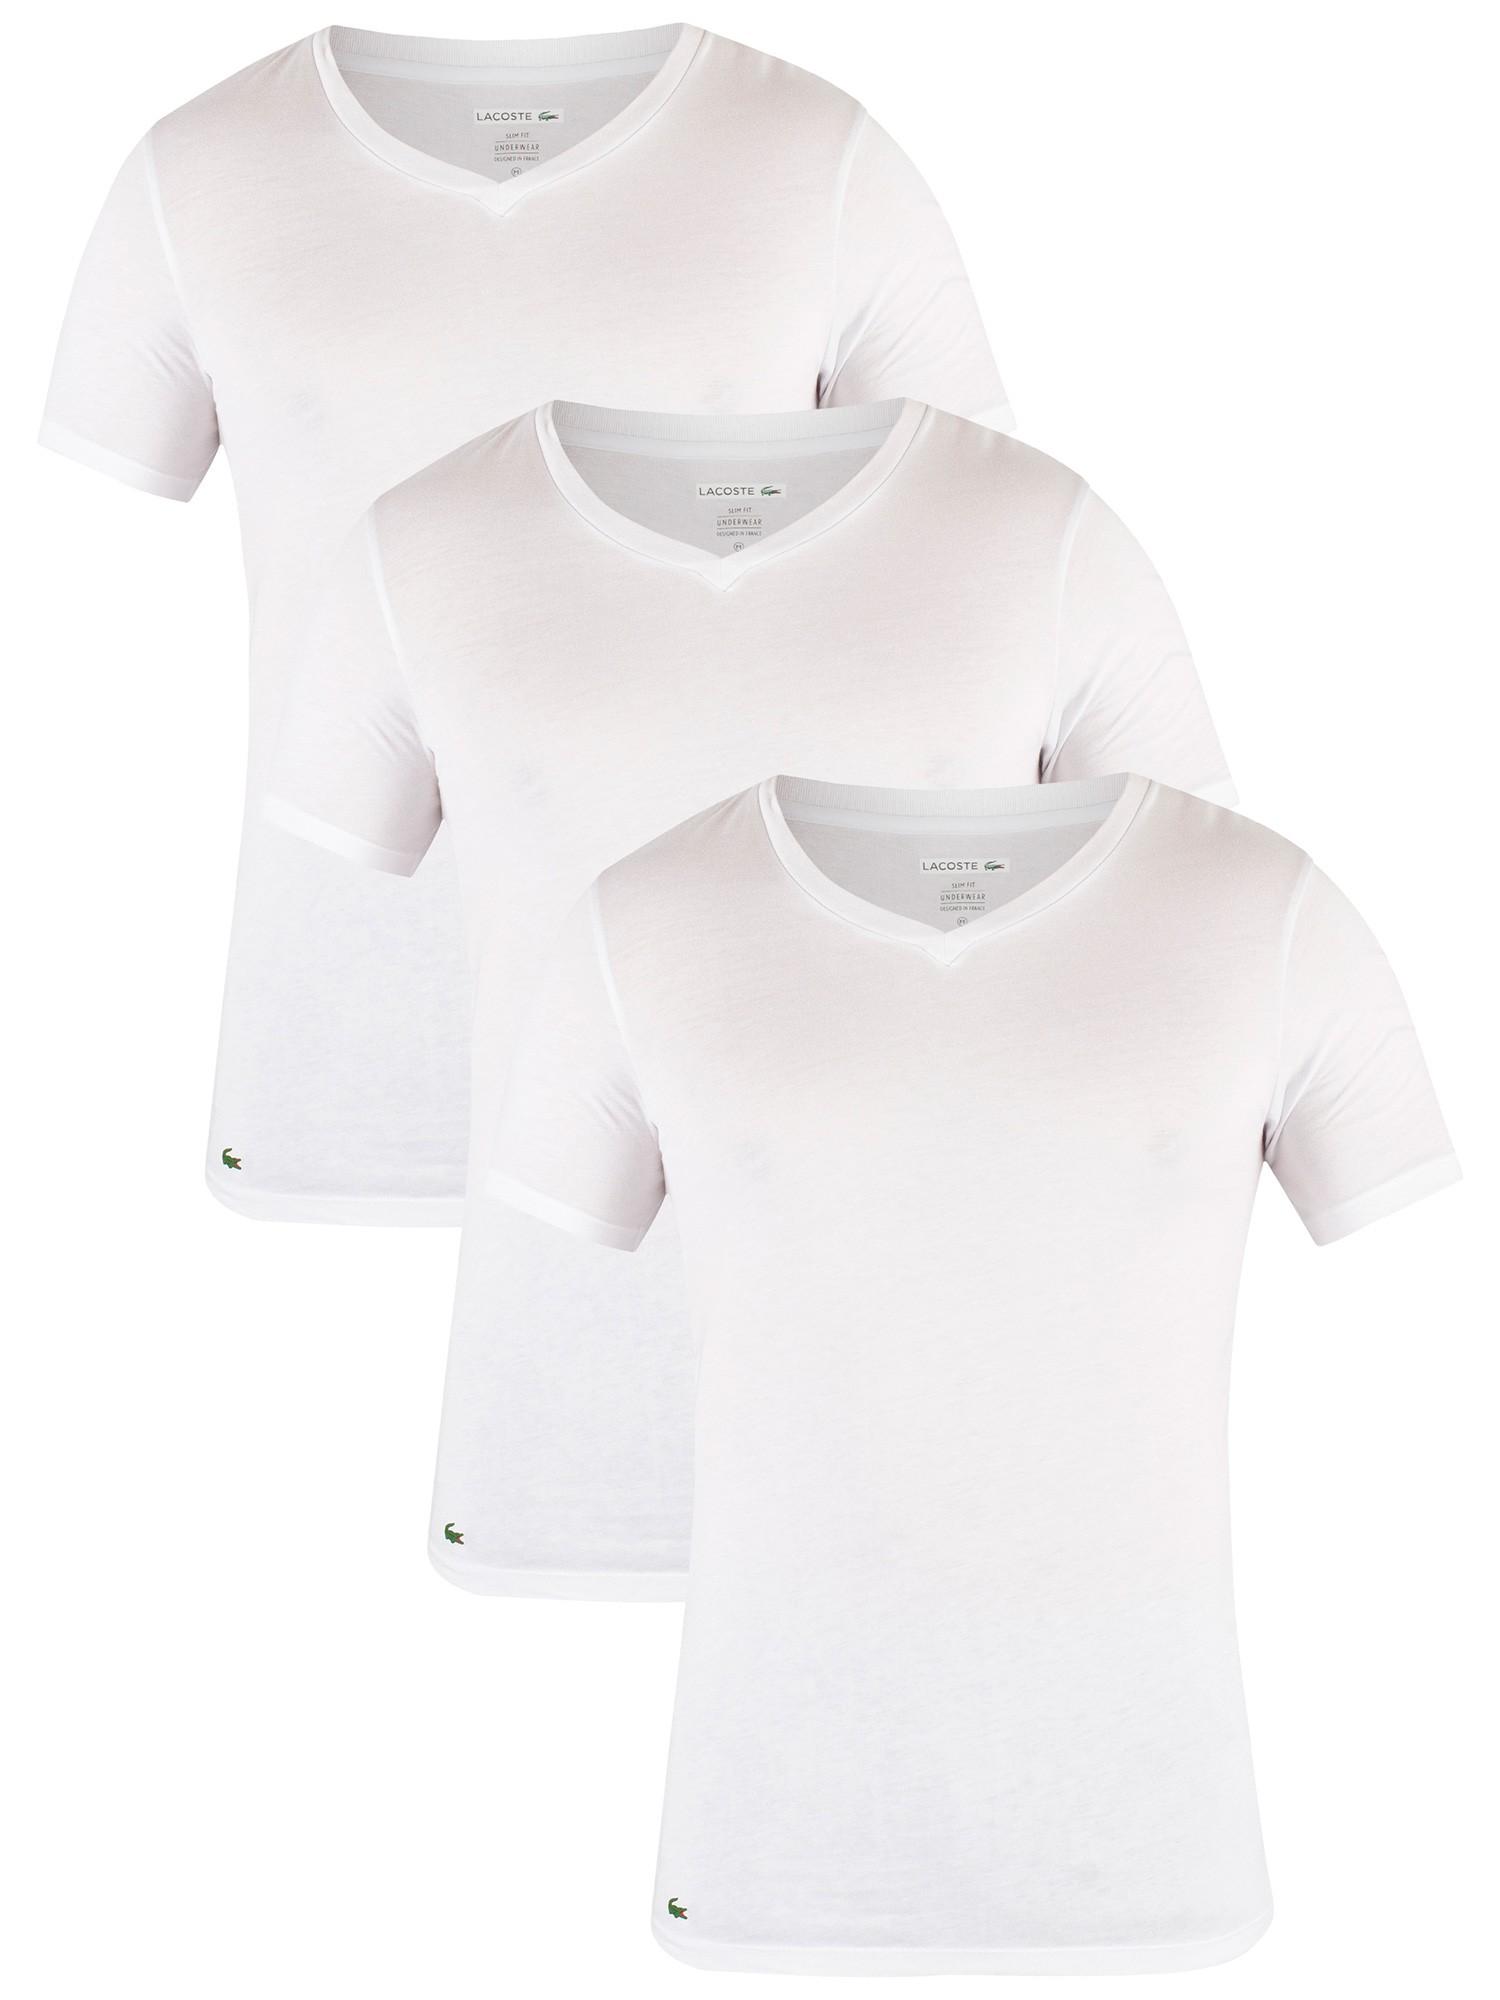 Solid Colors Grey Essentials Slim Fit V-Neck Lacoste 3 Pack Mens T-Shirt